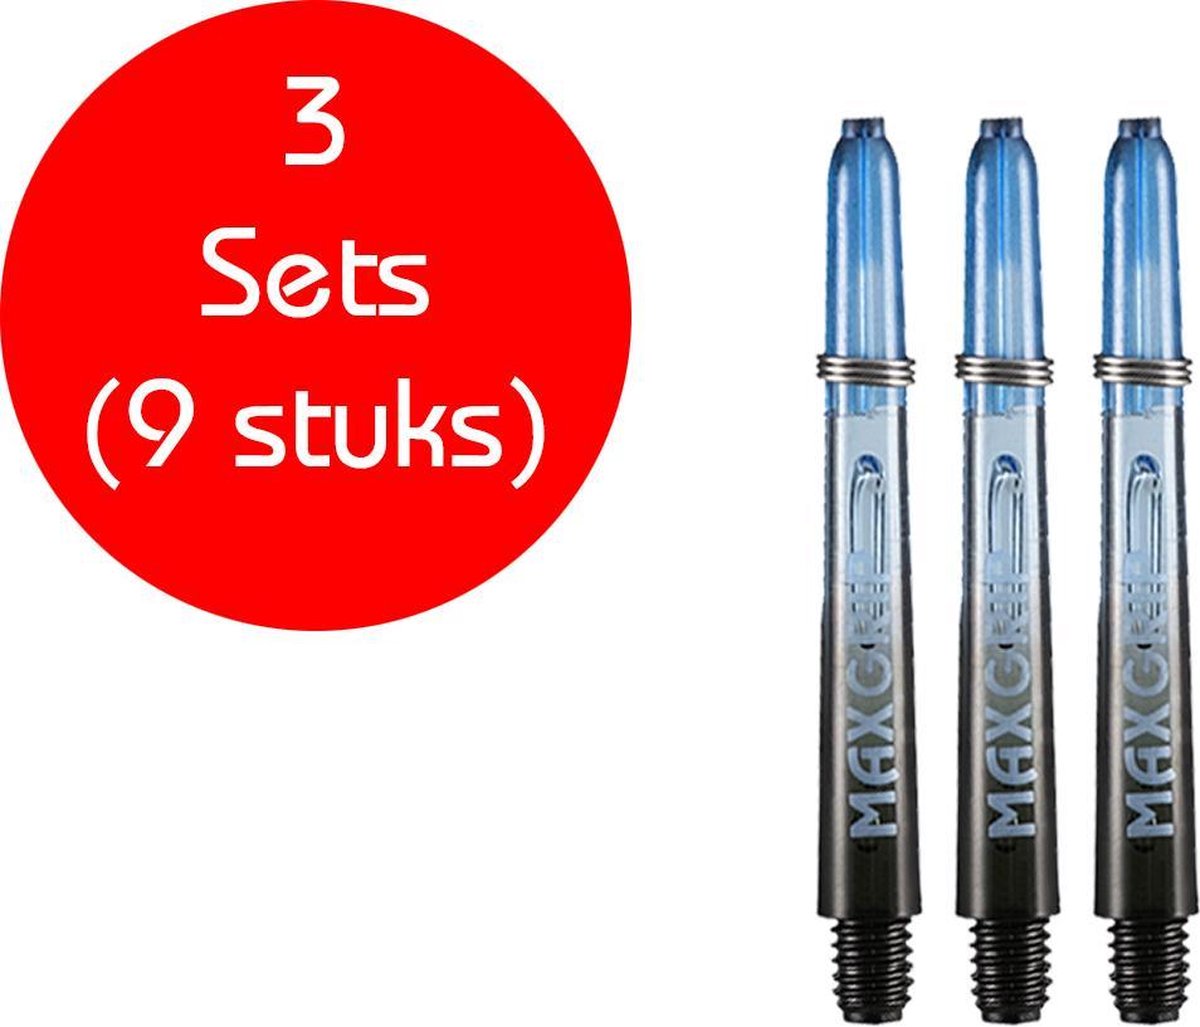 Dragon darts - Maxgrip - 3 sets (9 stuks) - dart shafts - zwart-blauw - darts shafts - inbetween